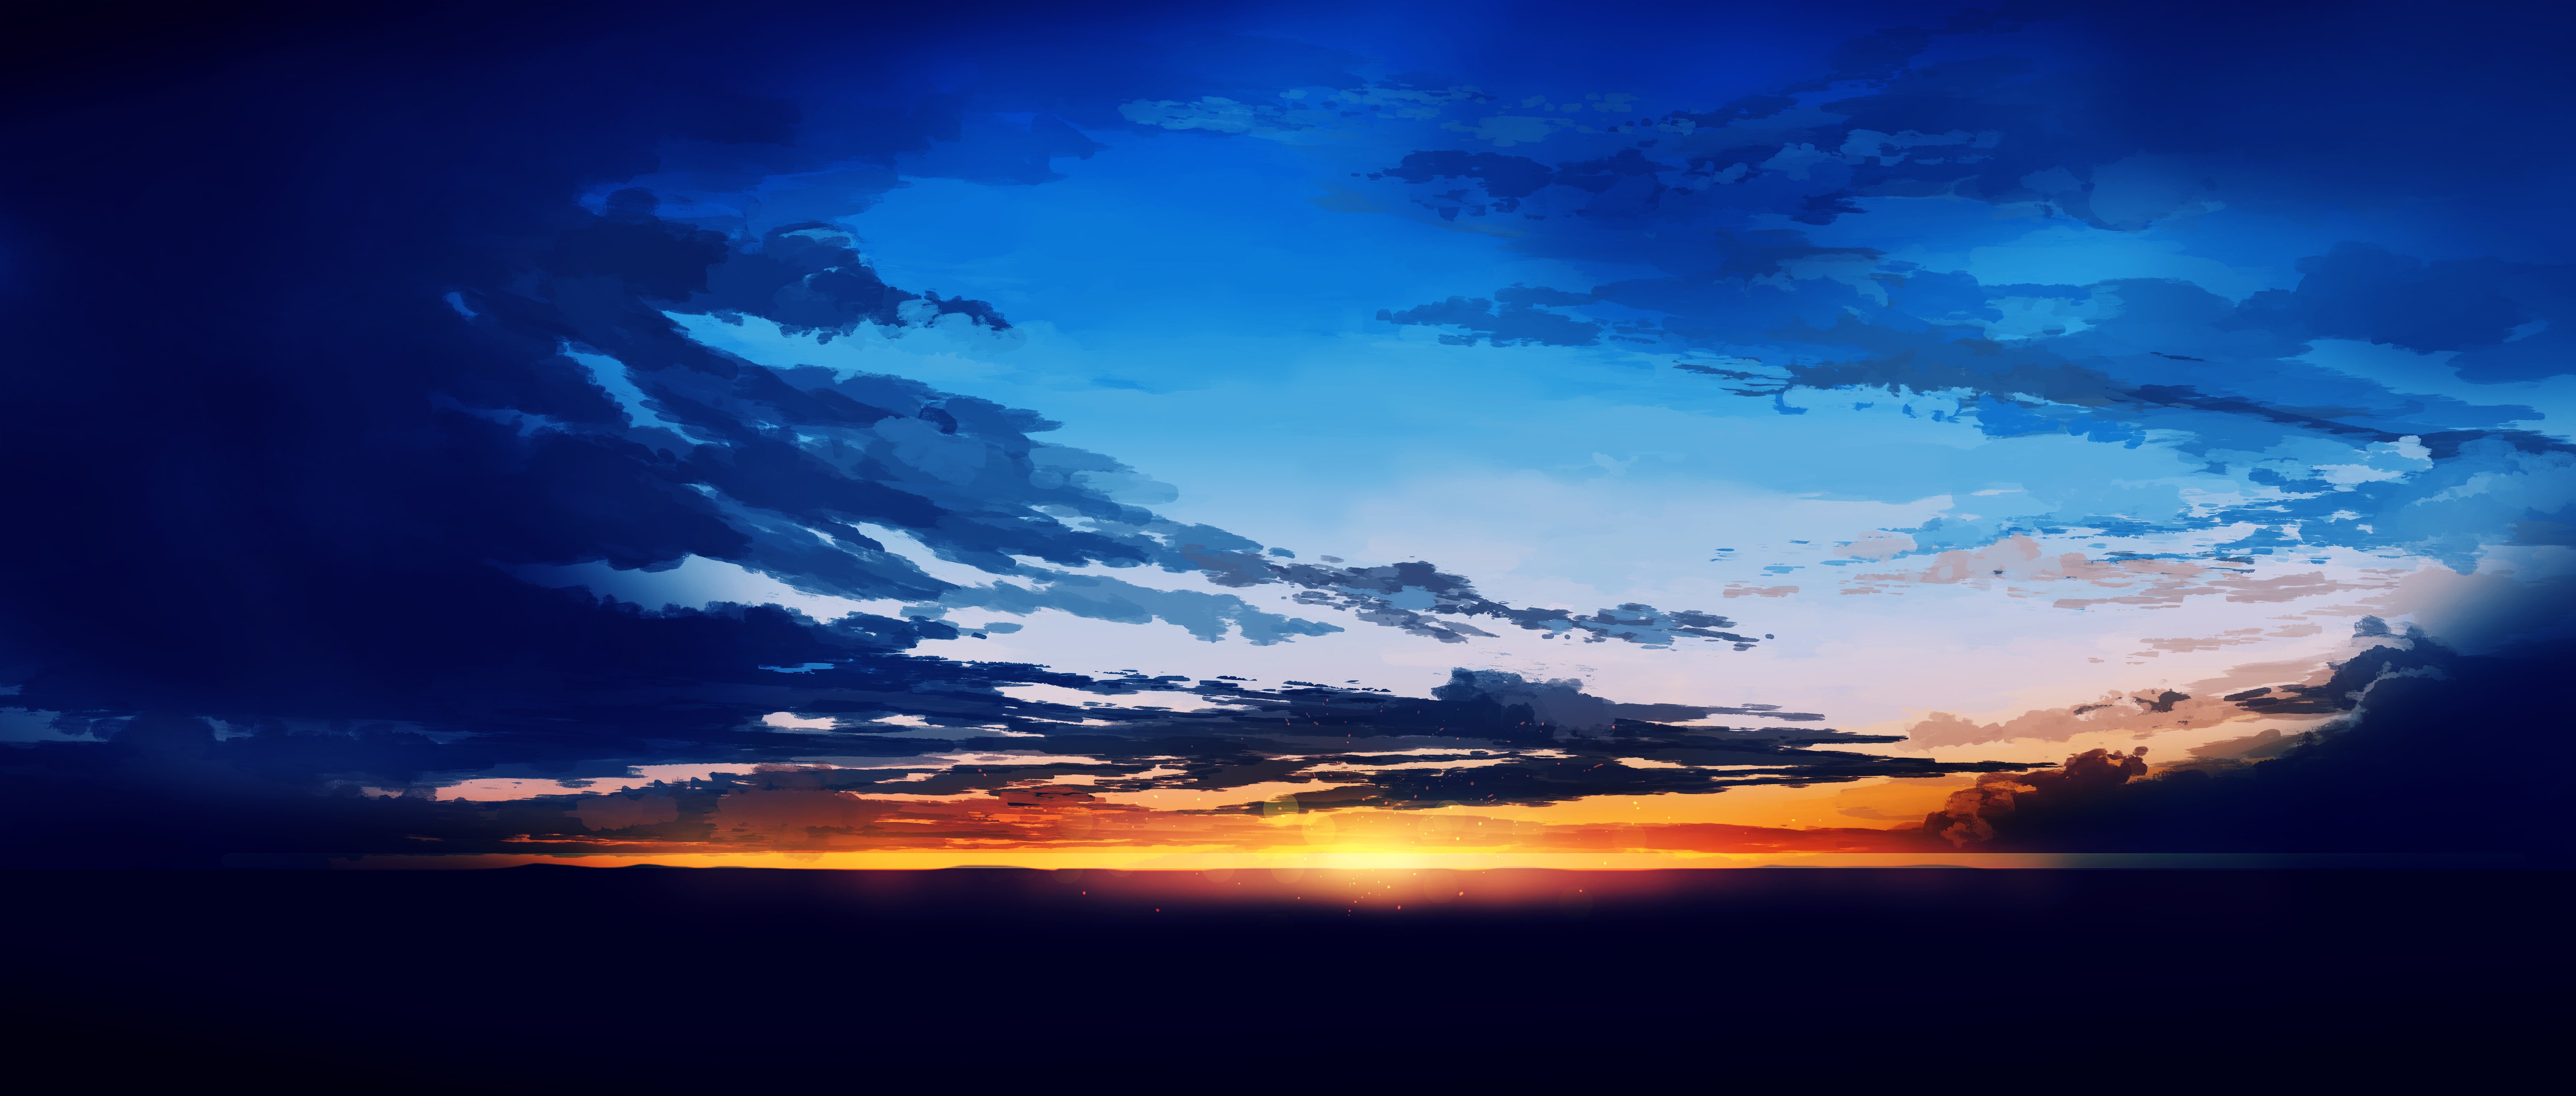 Artwork Digital Art Sunset Clouds Digital Painting Sky Sun Gracile Wallpaper:5640x2400